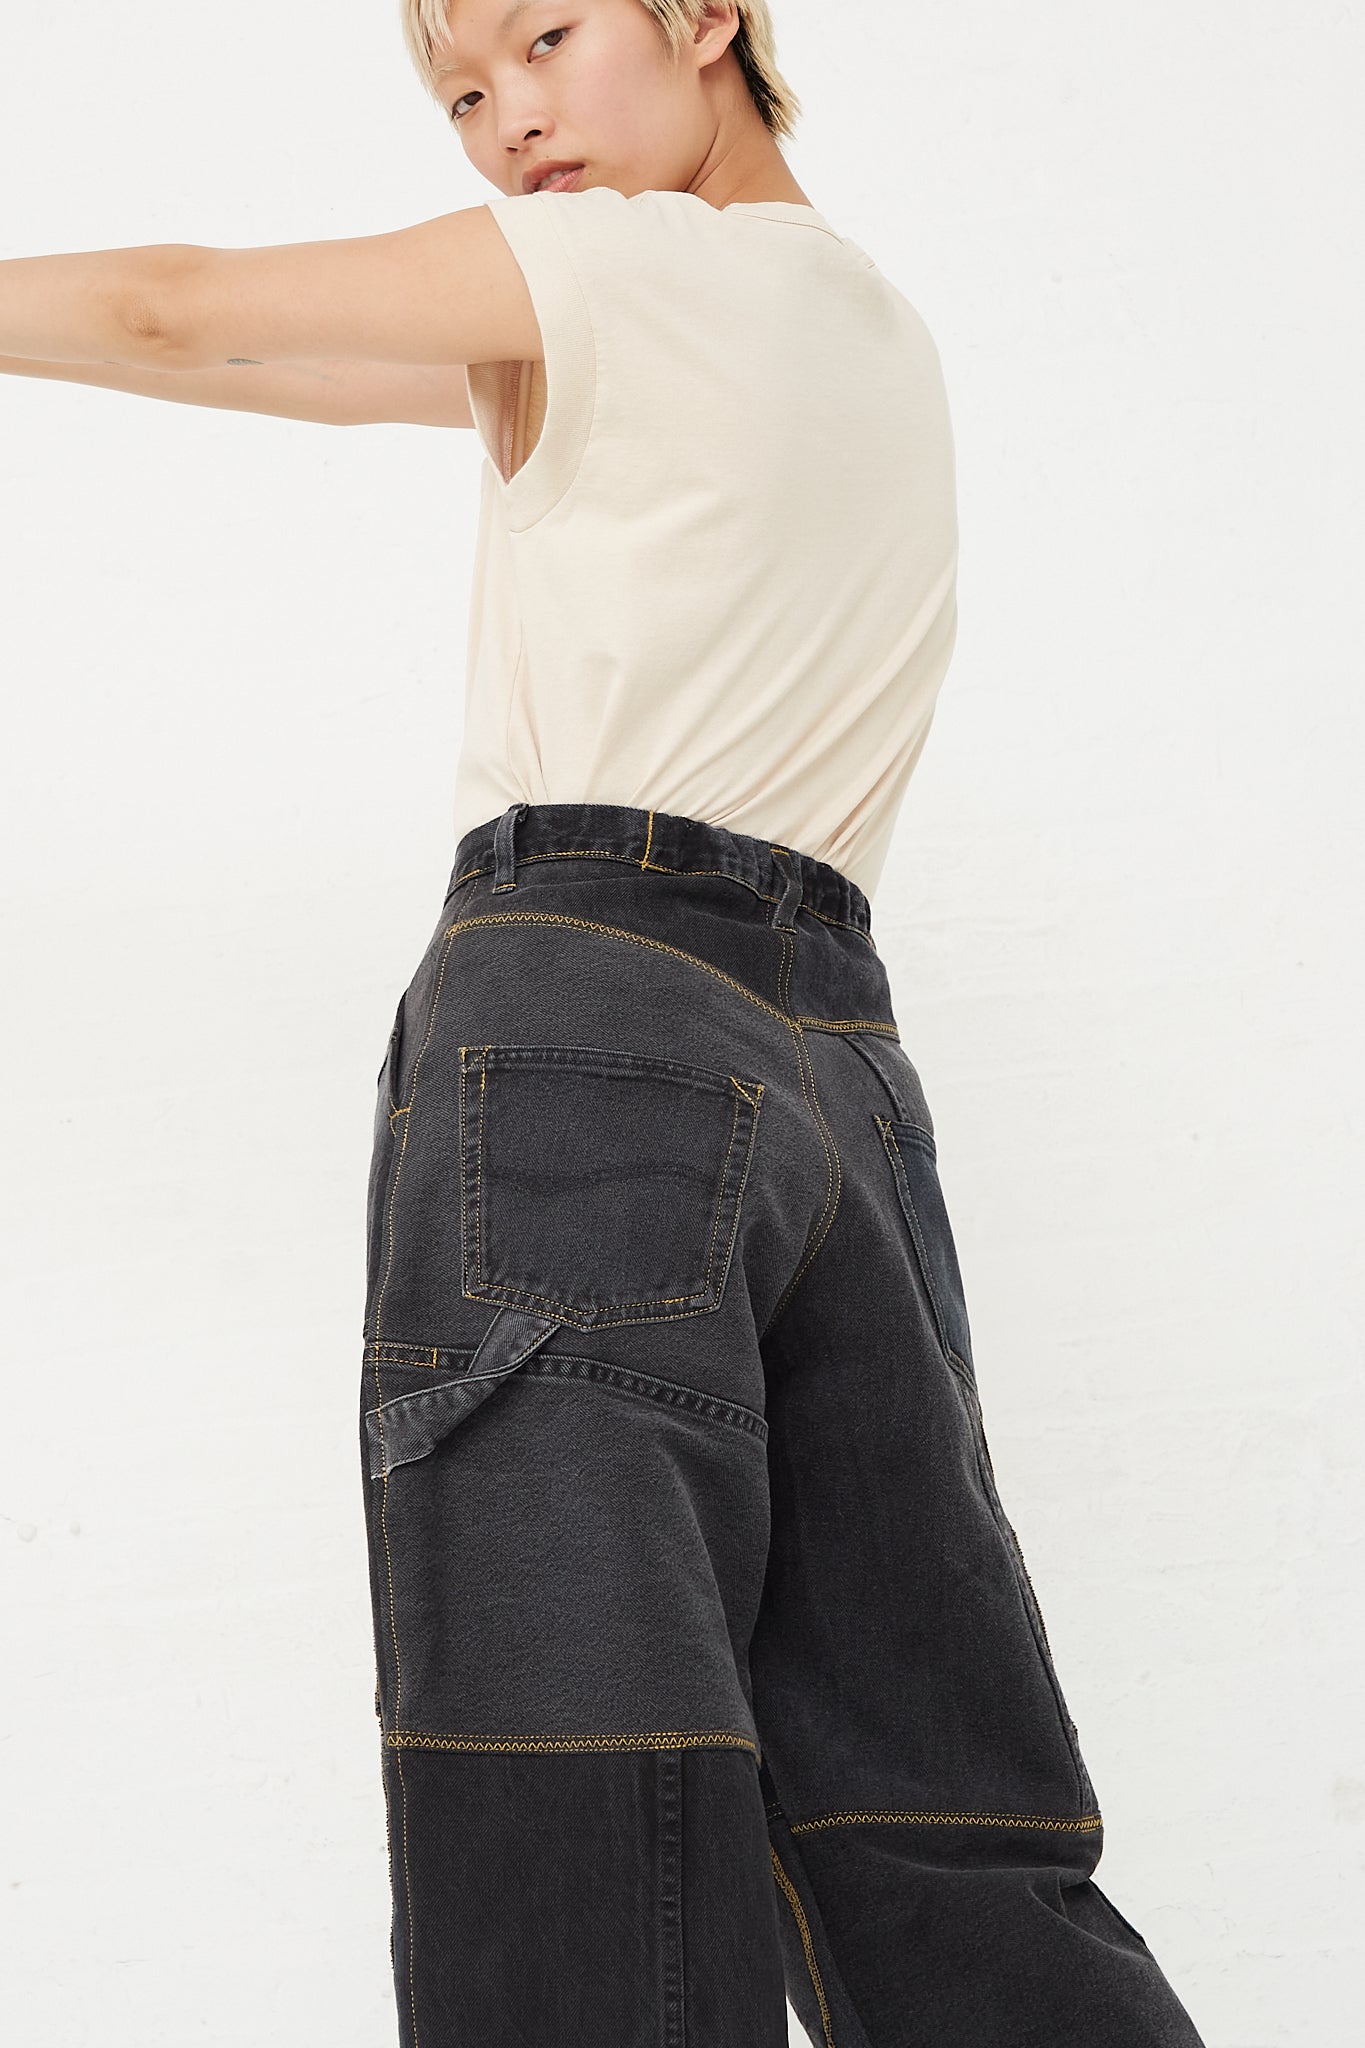 WildRootz - Reworked Jeans in Black Variation B - M side pocket detail